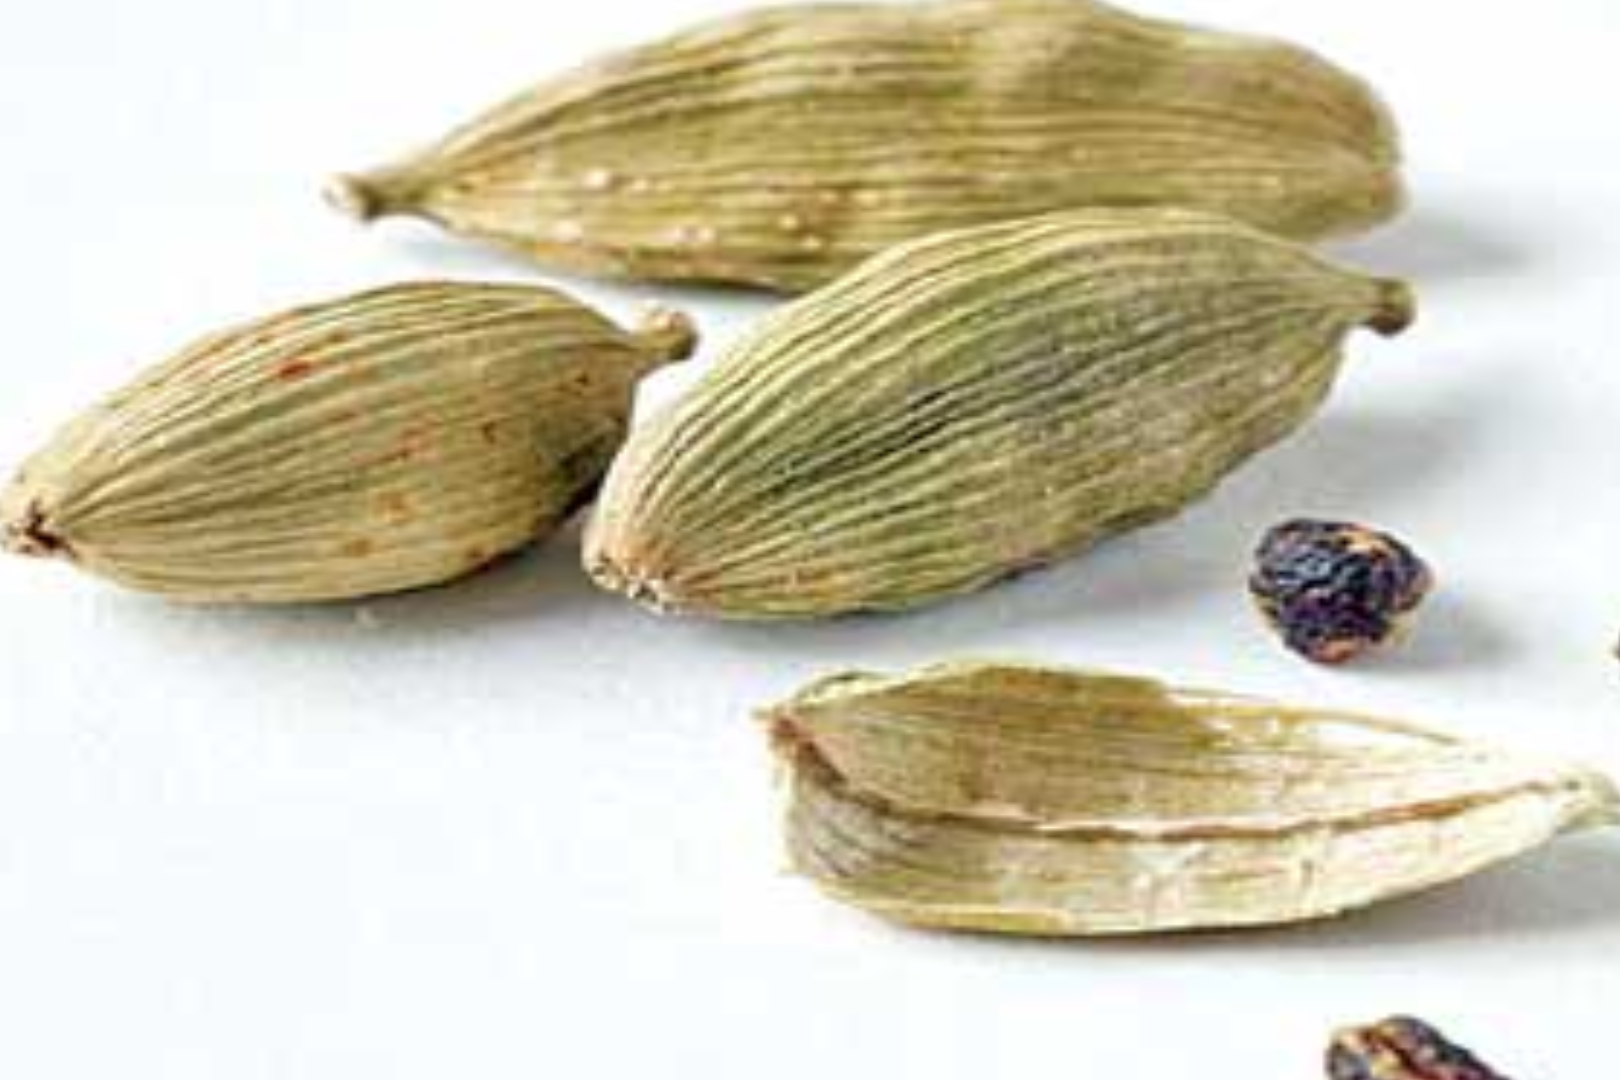 health benefits of biryani spices or biryani masala